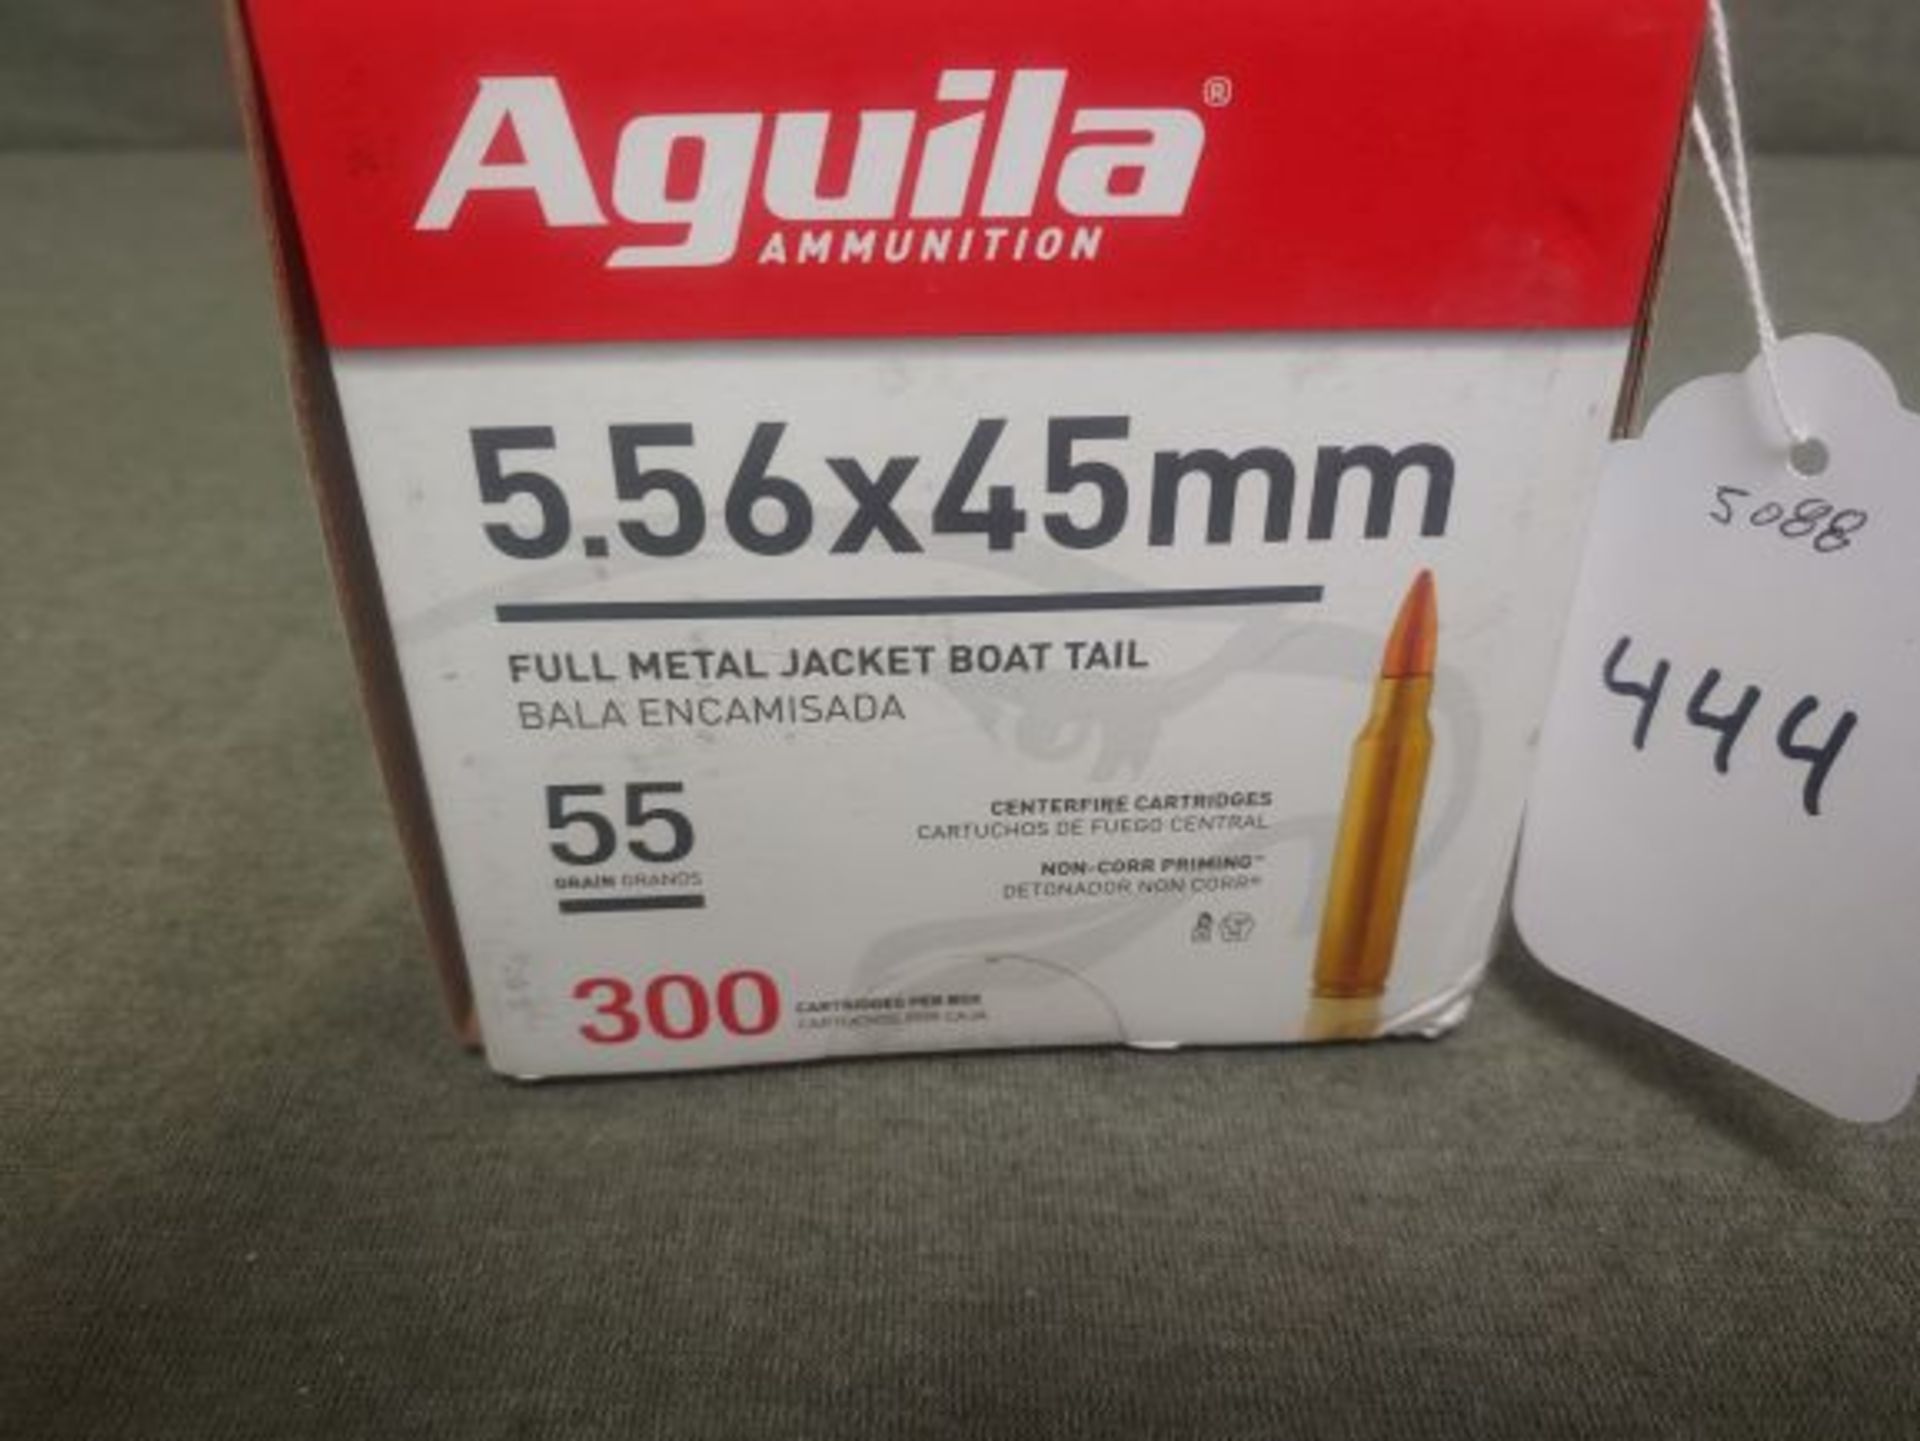 444. Aguila 5.56x45mm FMJBT 55gr., 300 Rnd. Box (1x the Money) - Image 2 of 2